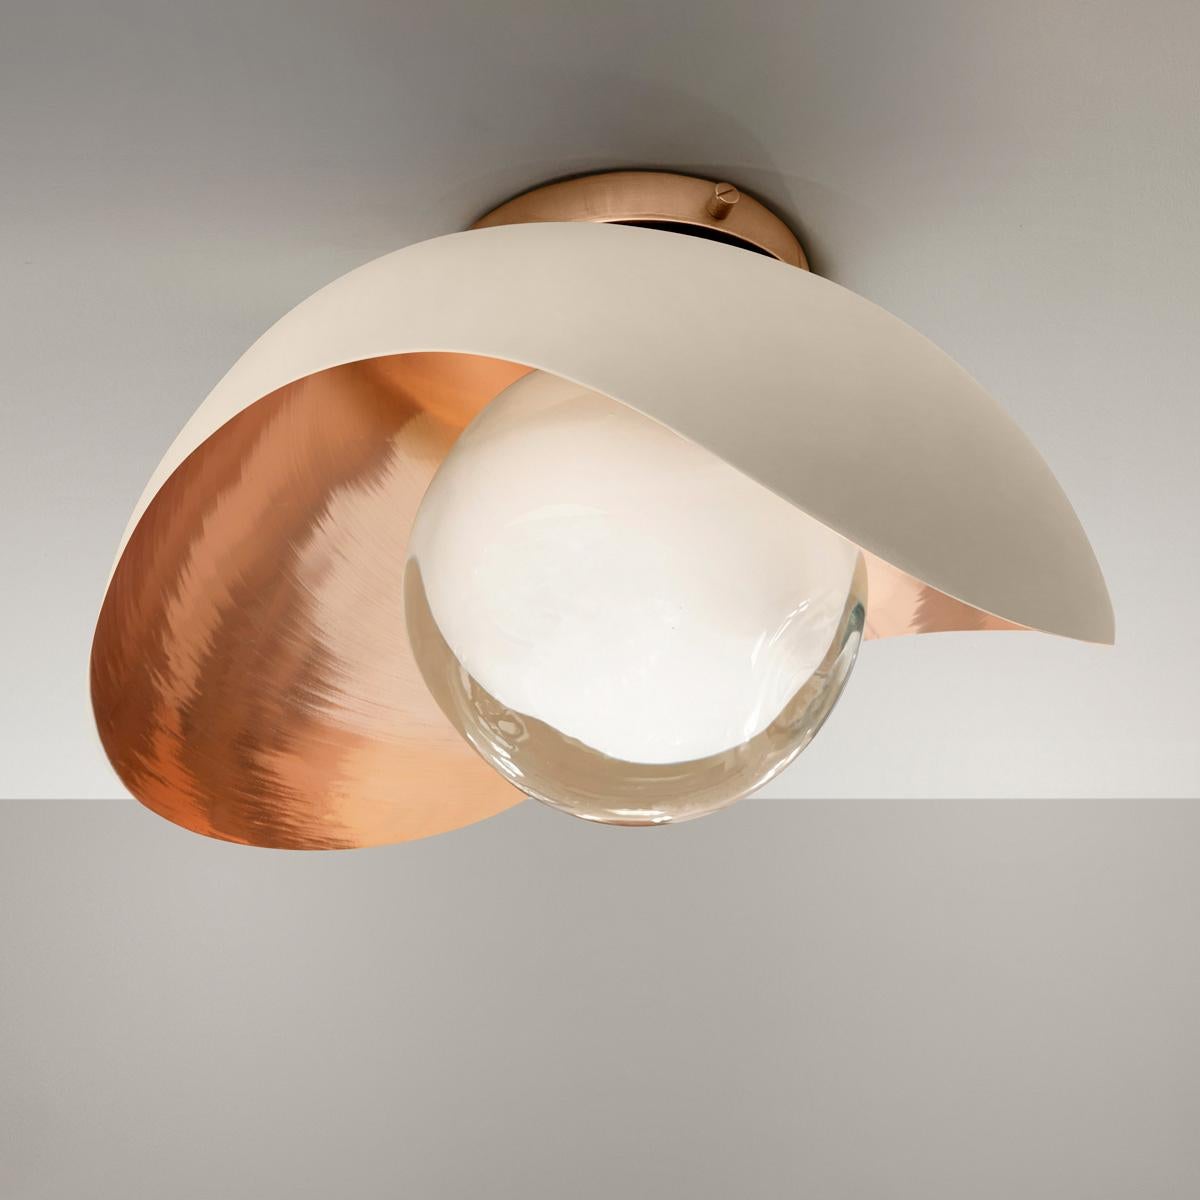 Perla Flushmount Ceiling Light by Gaspare Asaro-Brass Finish For Sale 3